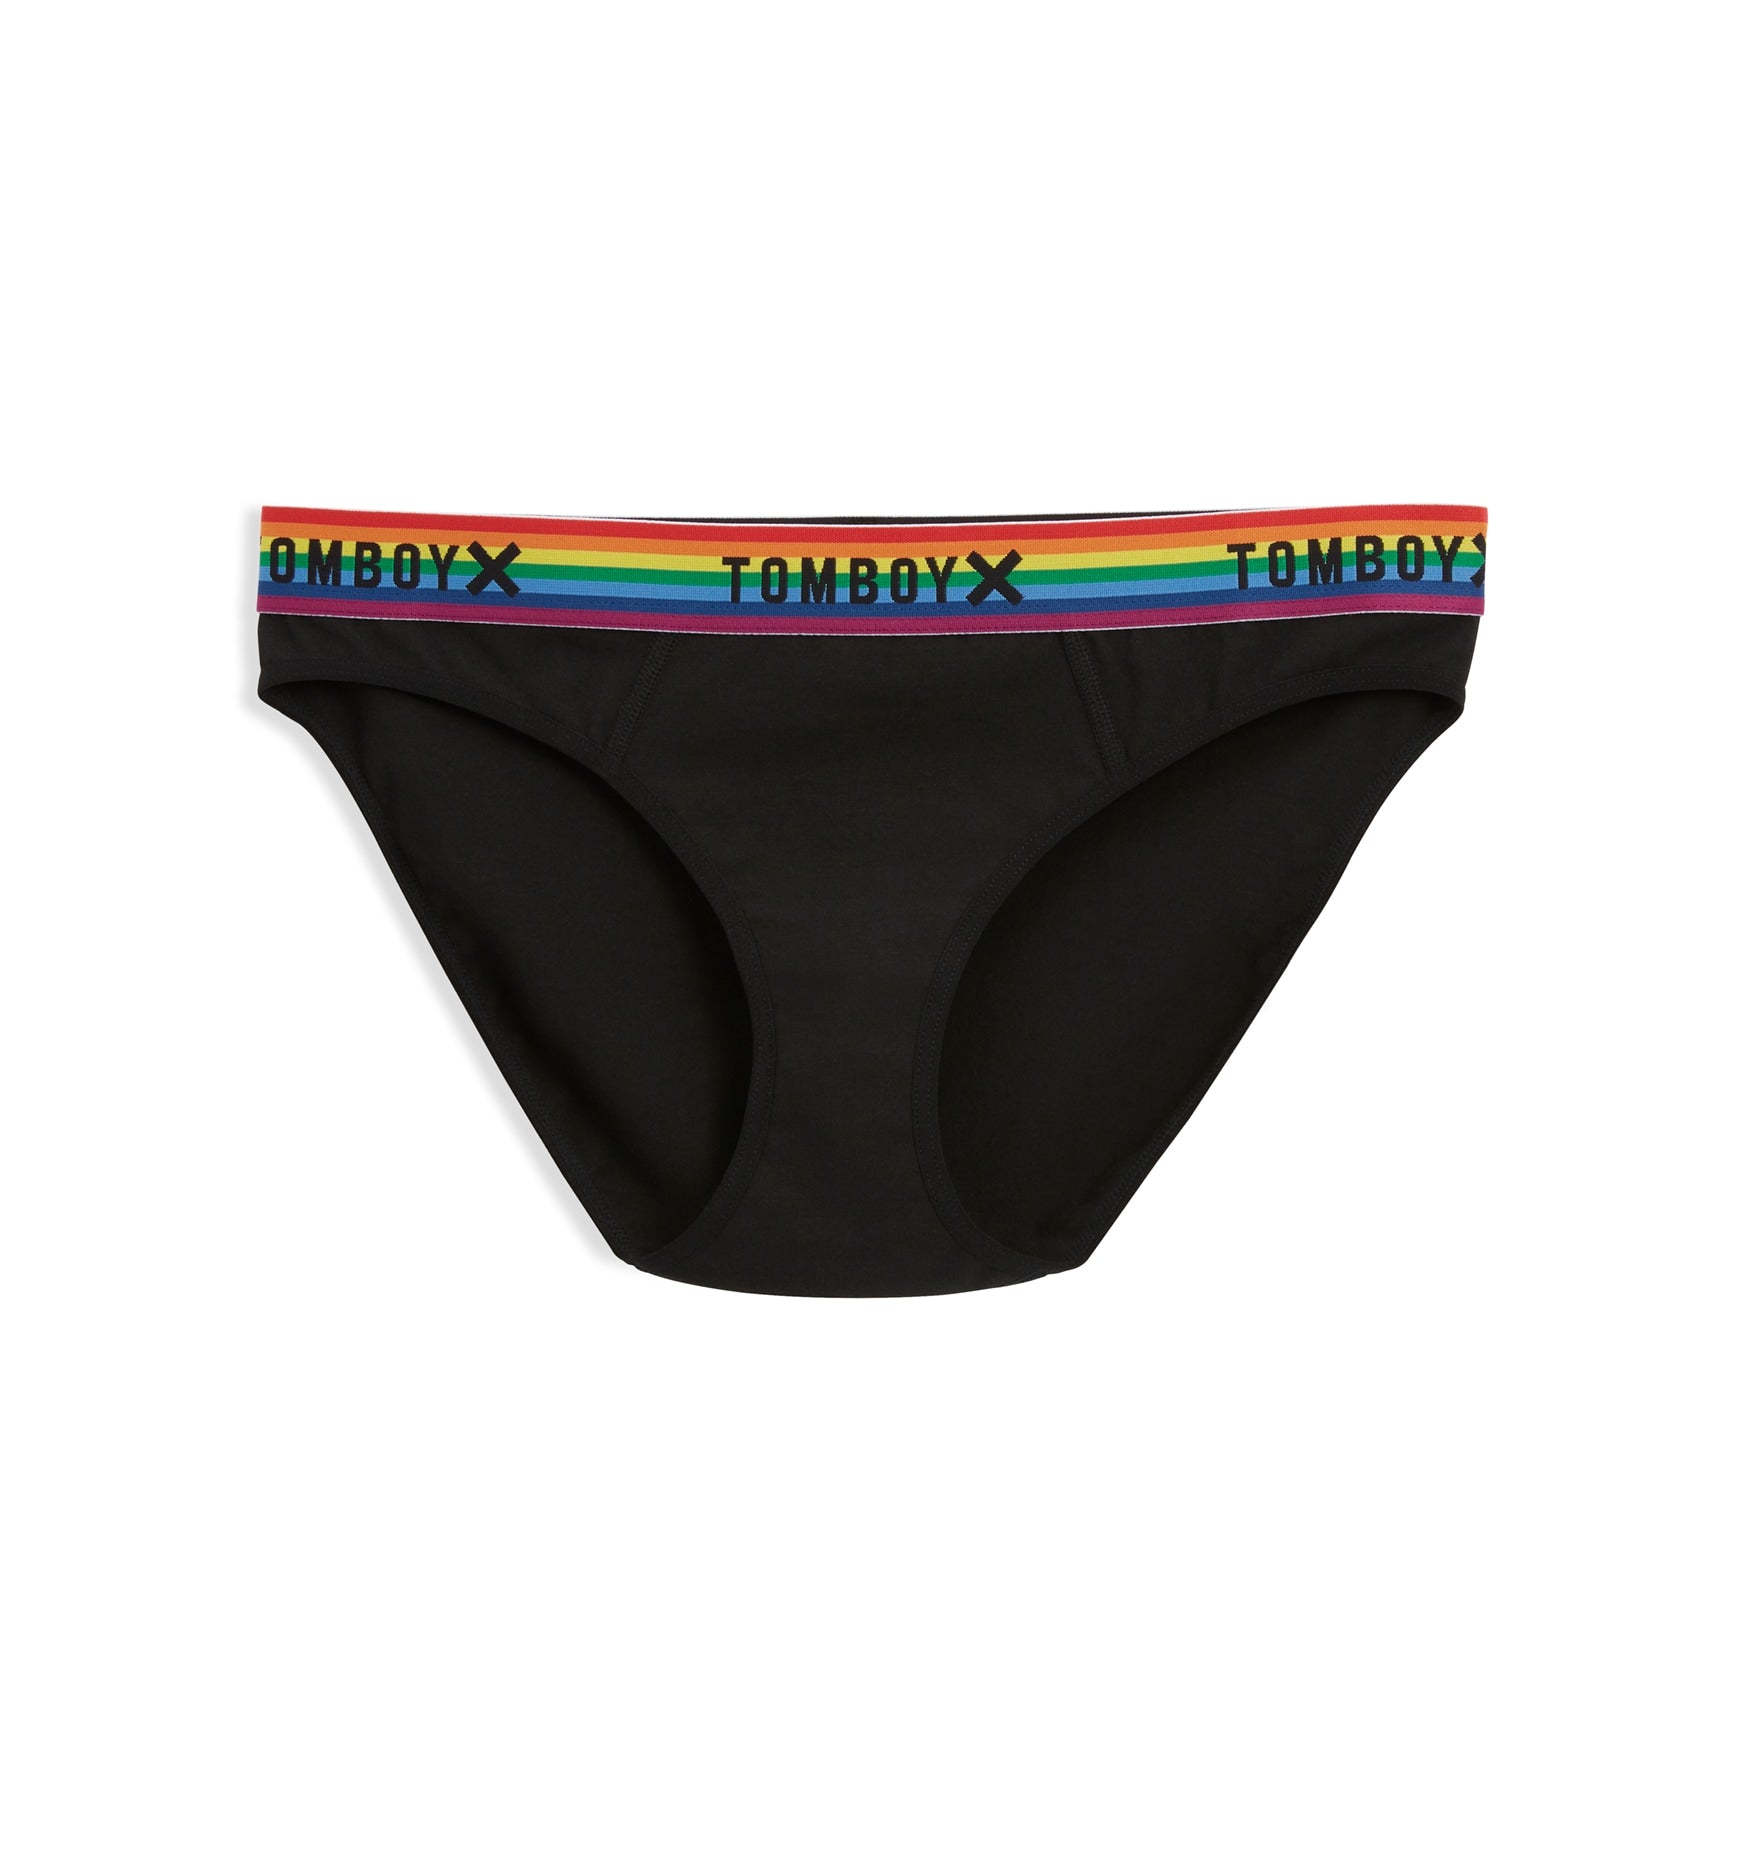 Home - JOR Underwear - Colombia